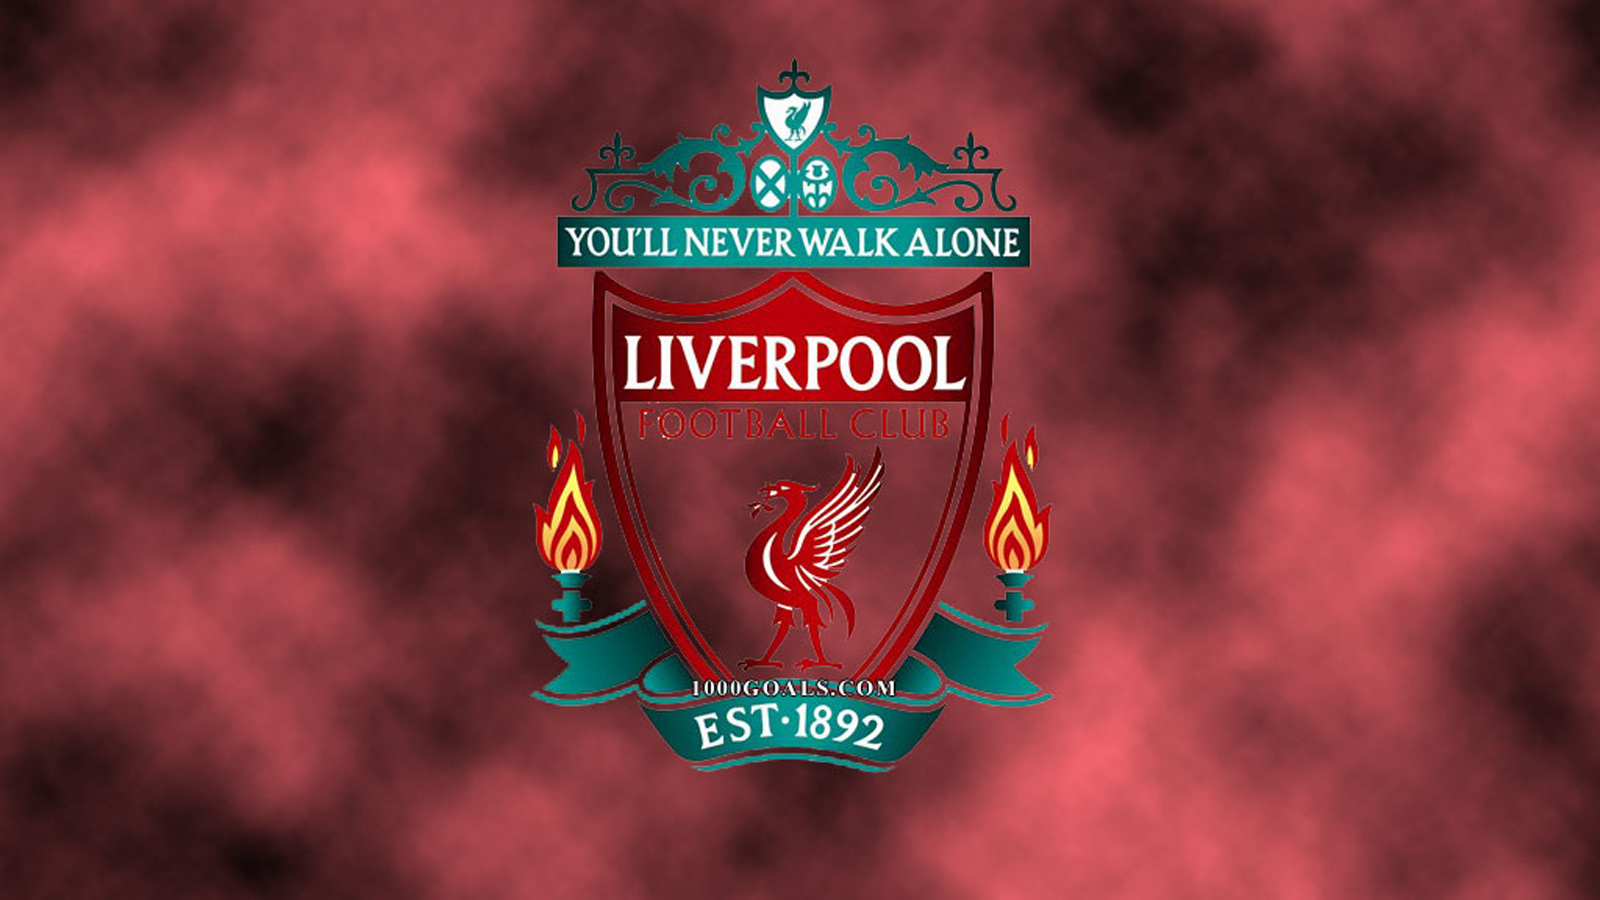  Liverpool Football club